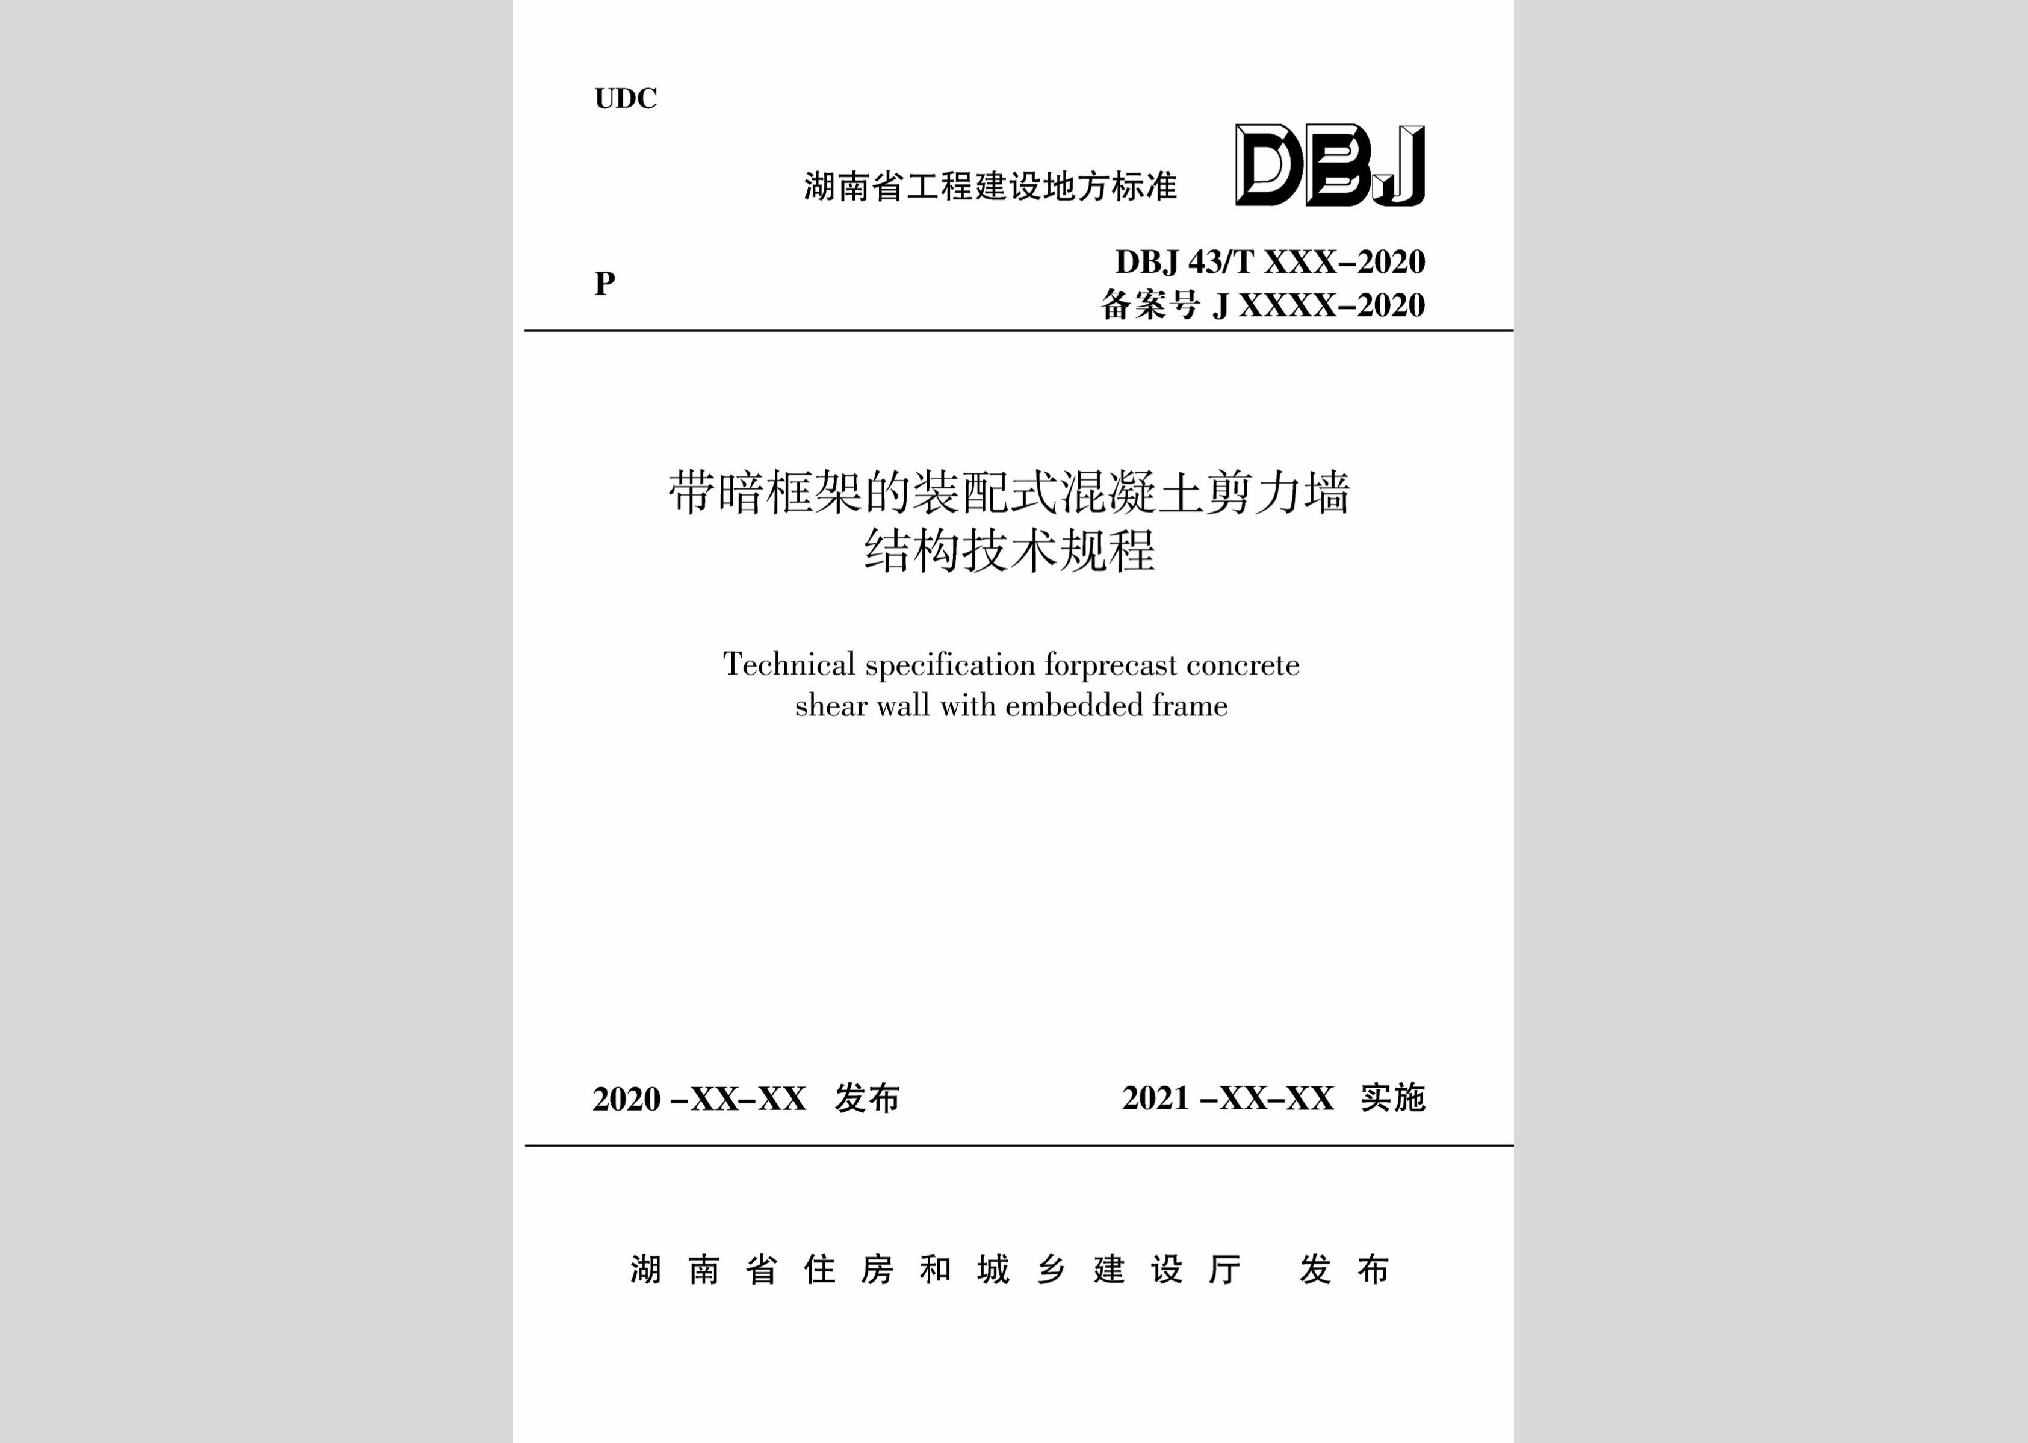 DBJ43/T363-2020：带暗框架的装配式混凝土剪力墙结构技术规程